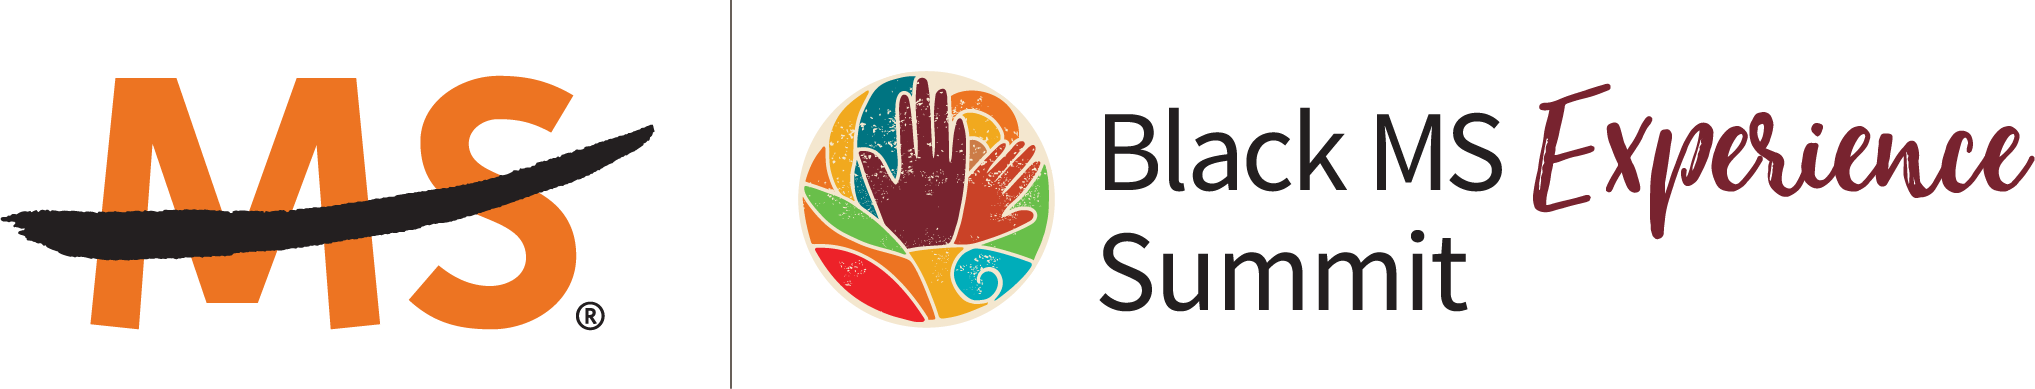 Black MS Experience Summit